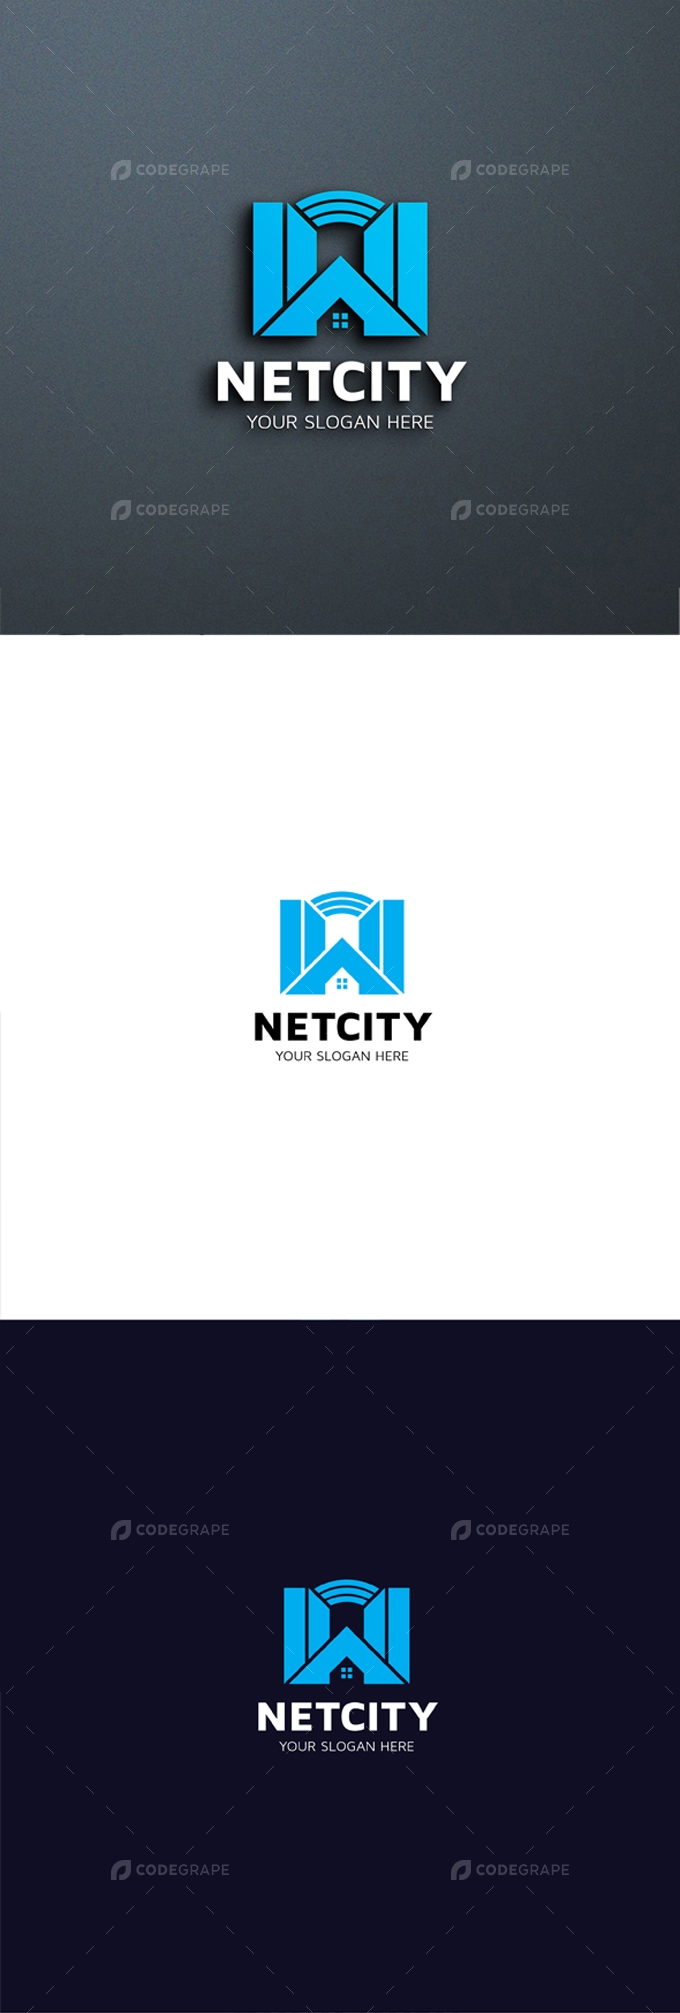 Network City - House Logo Template